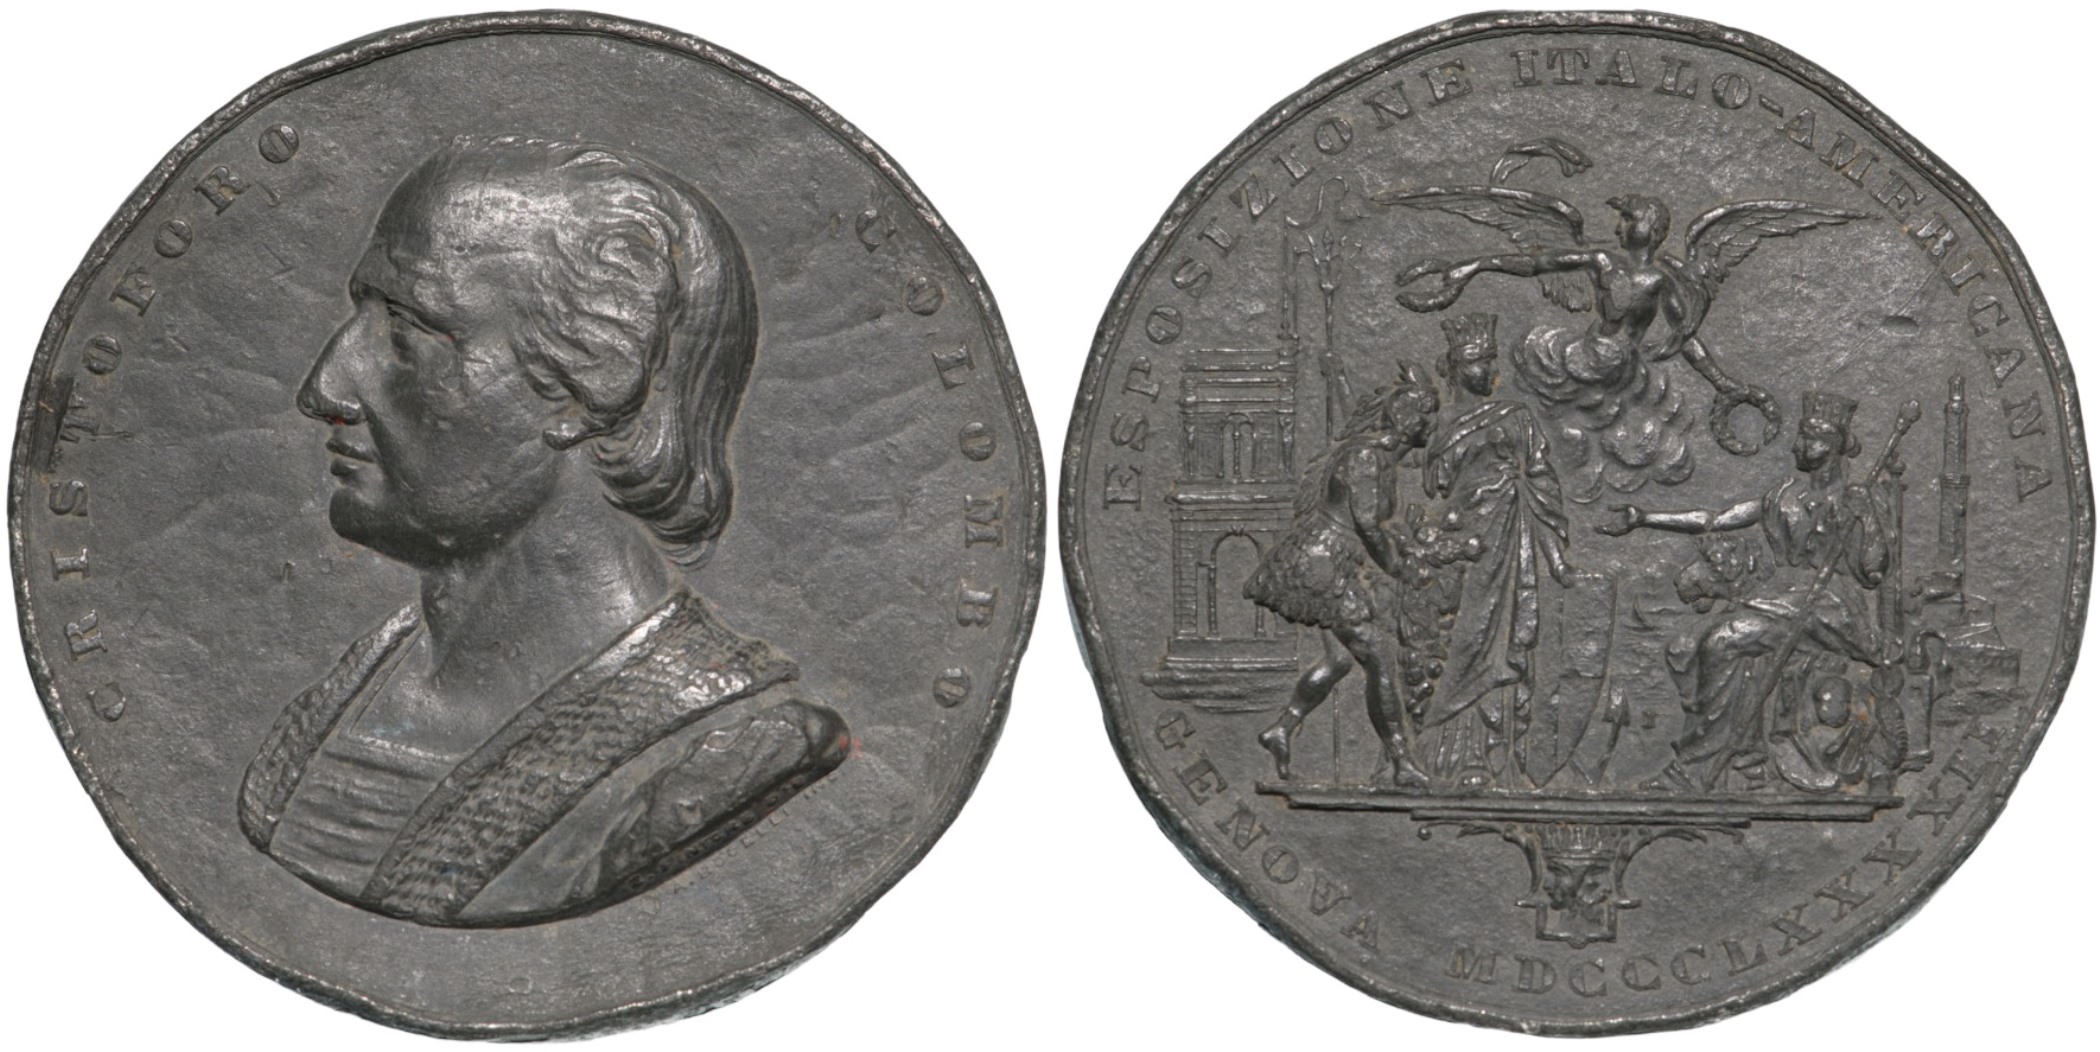 Cristopher Columbus (1451-1506) - Medal 1892 - Italo-American Exhibition